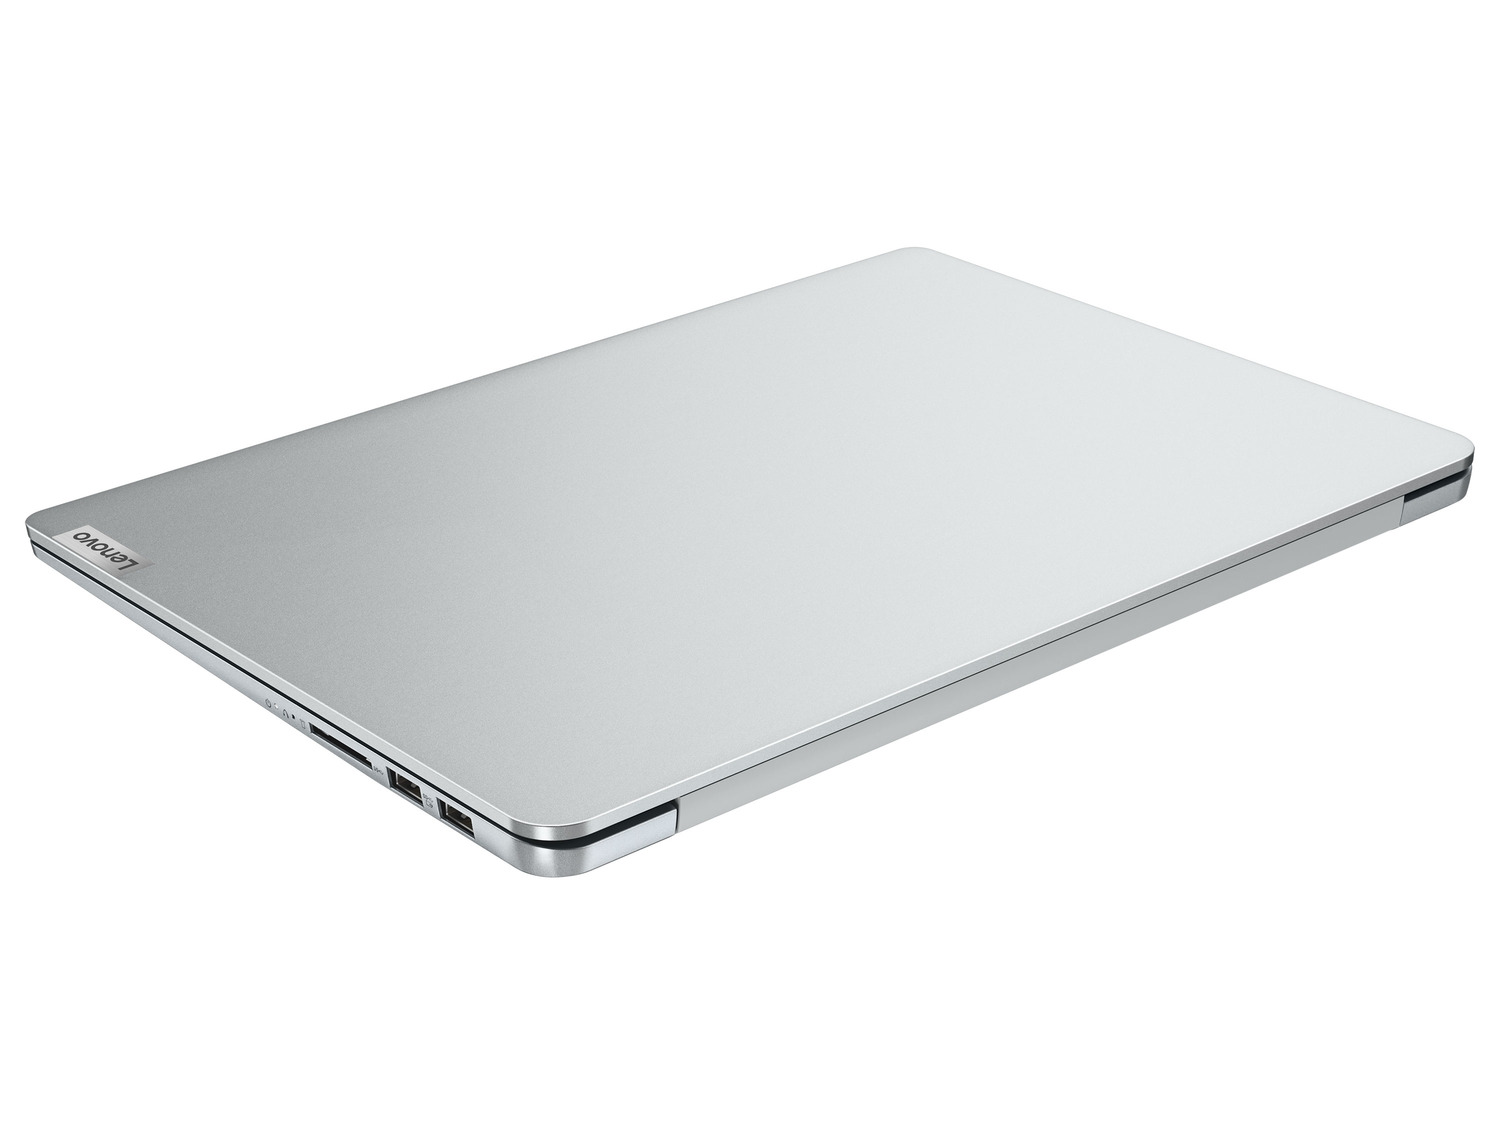 Pro 5 »14IAP7«, Lenovo IdeaPad Zoll, Intel… Full-HD, 14